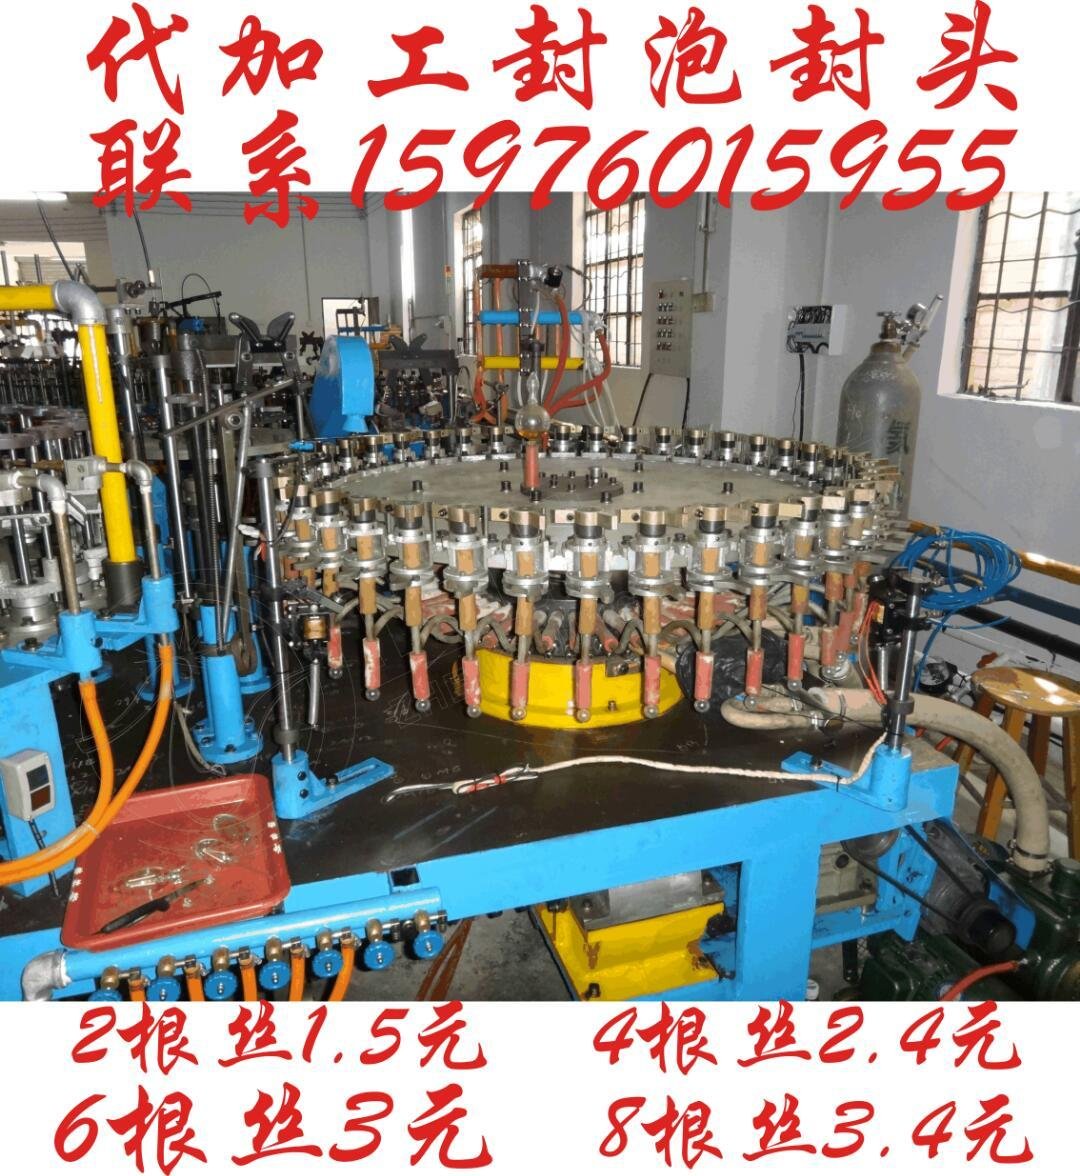 LED filament light generation processing hair bubble, head 2 4 root 2.4 1.5 yuan RMB 6 3 yuan 8 to 3